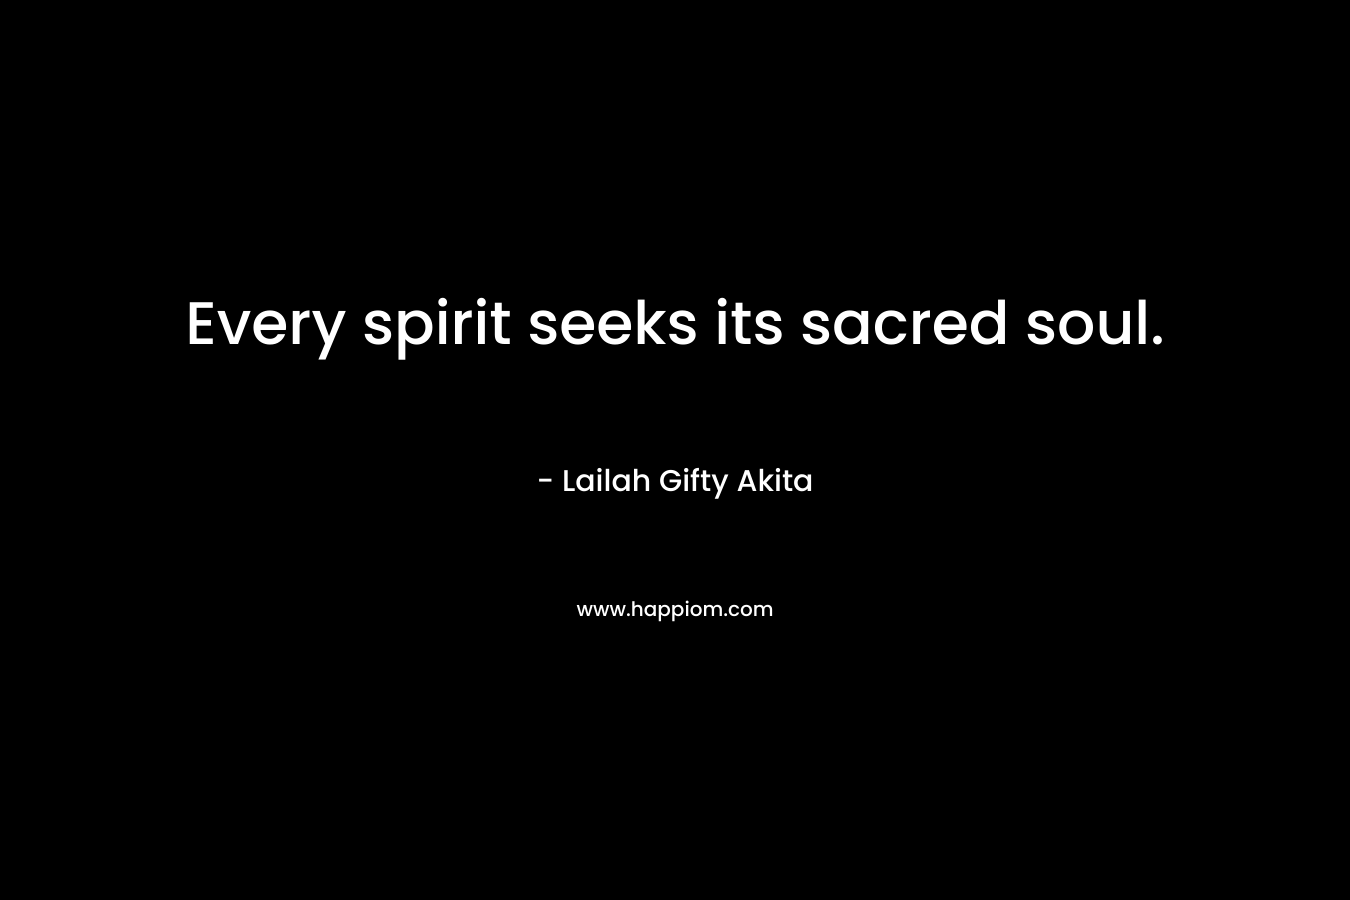 Every spirit seeks its sacred soul.